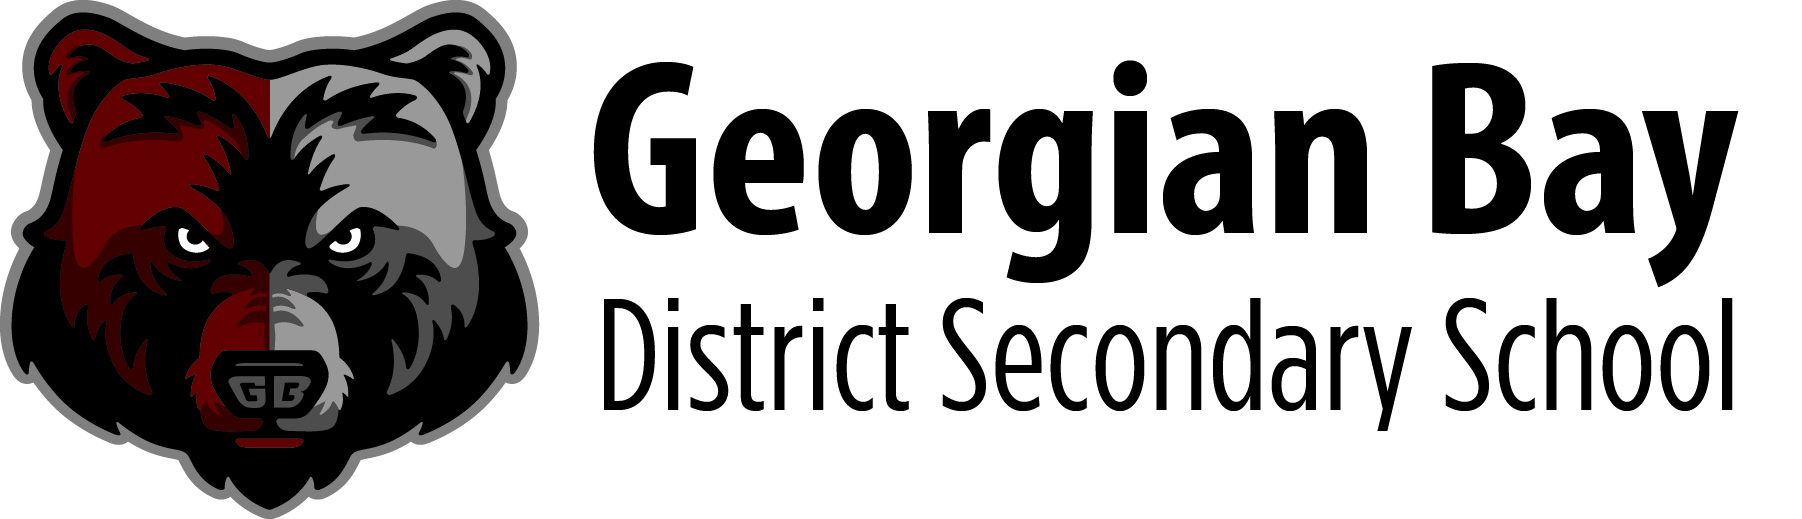 Georgian Bay District Secondary School